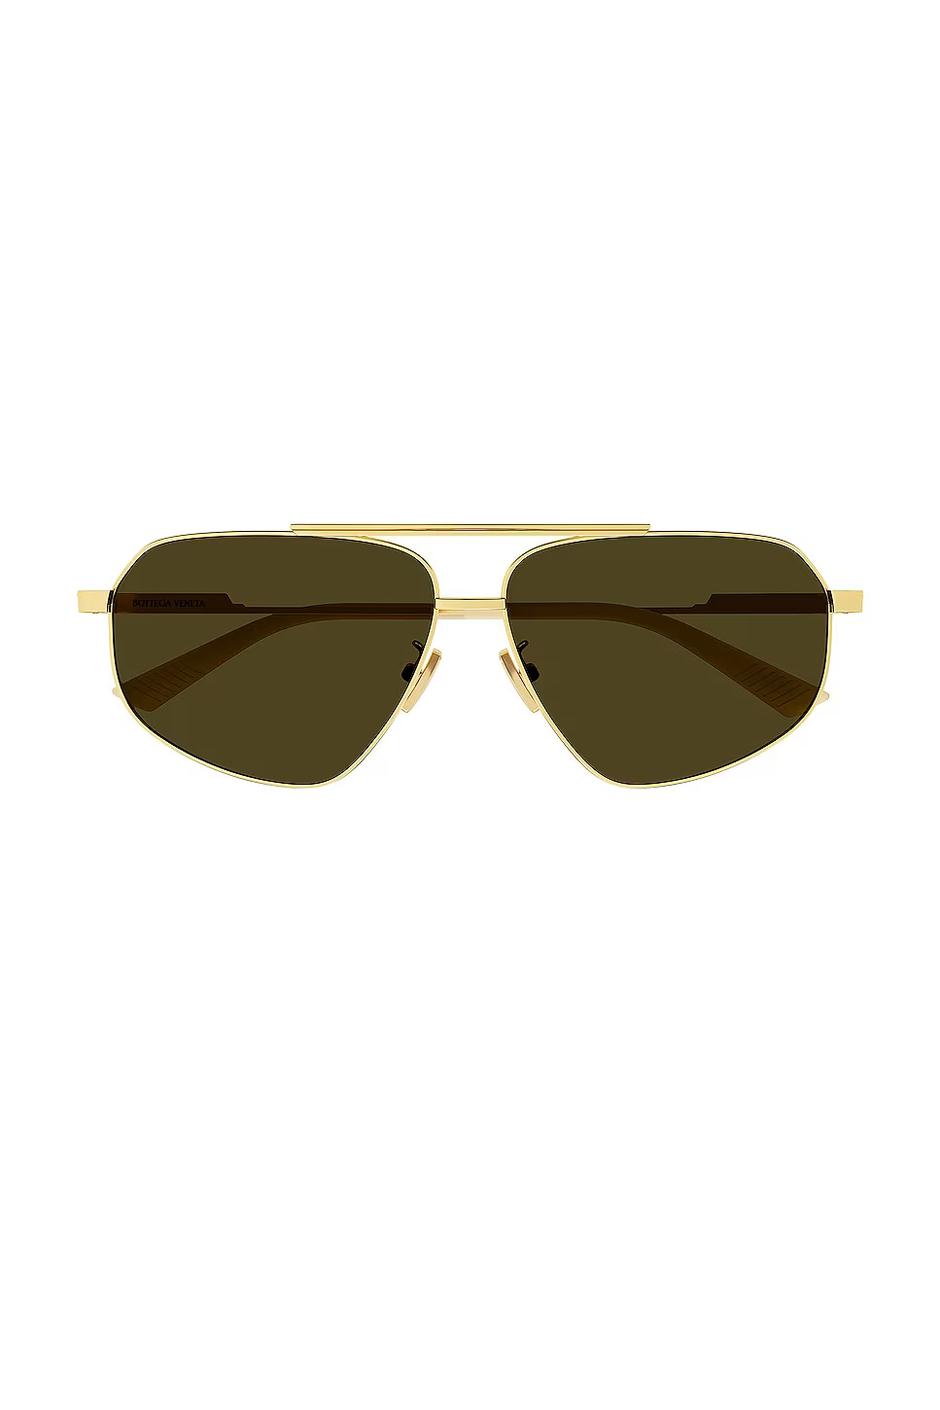 modeli sunčanih naočala | Autor: Revolve